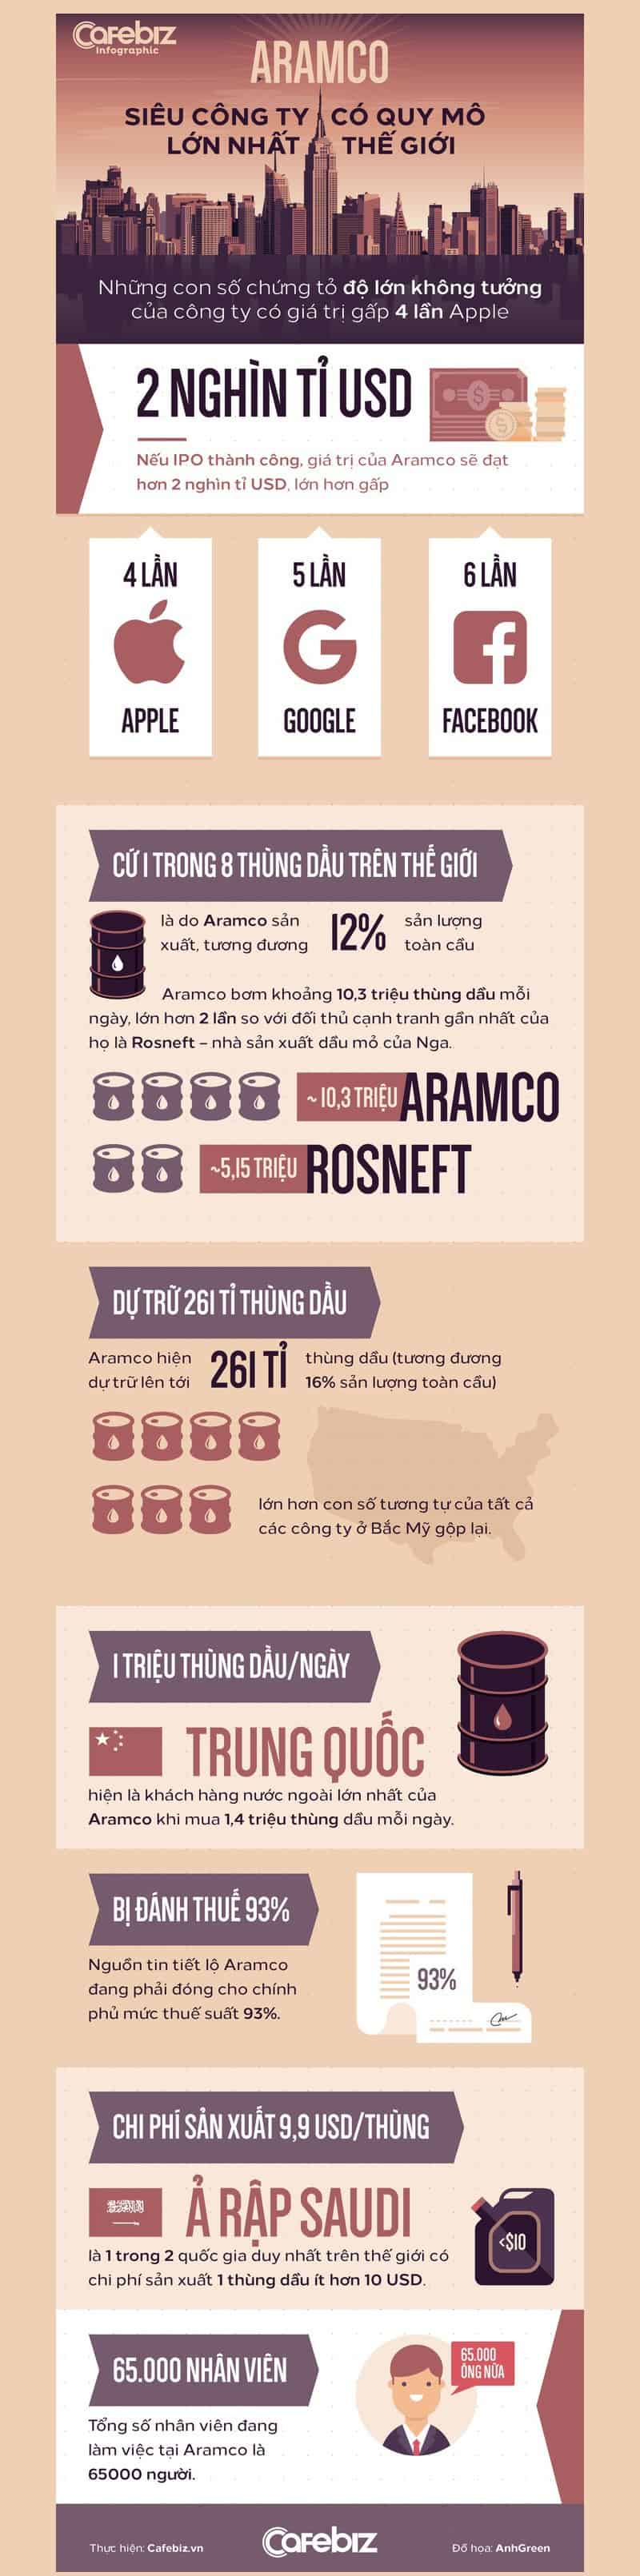 Infographic_ARAMCO